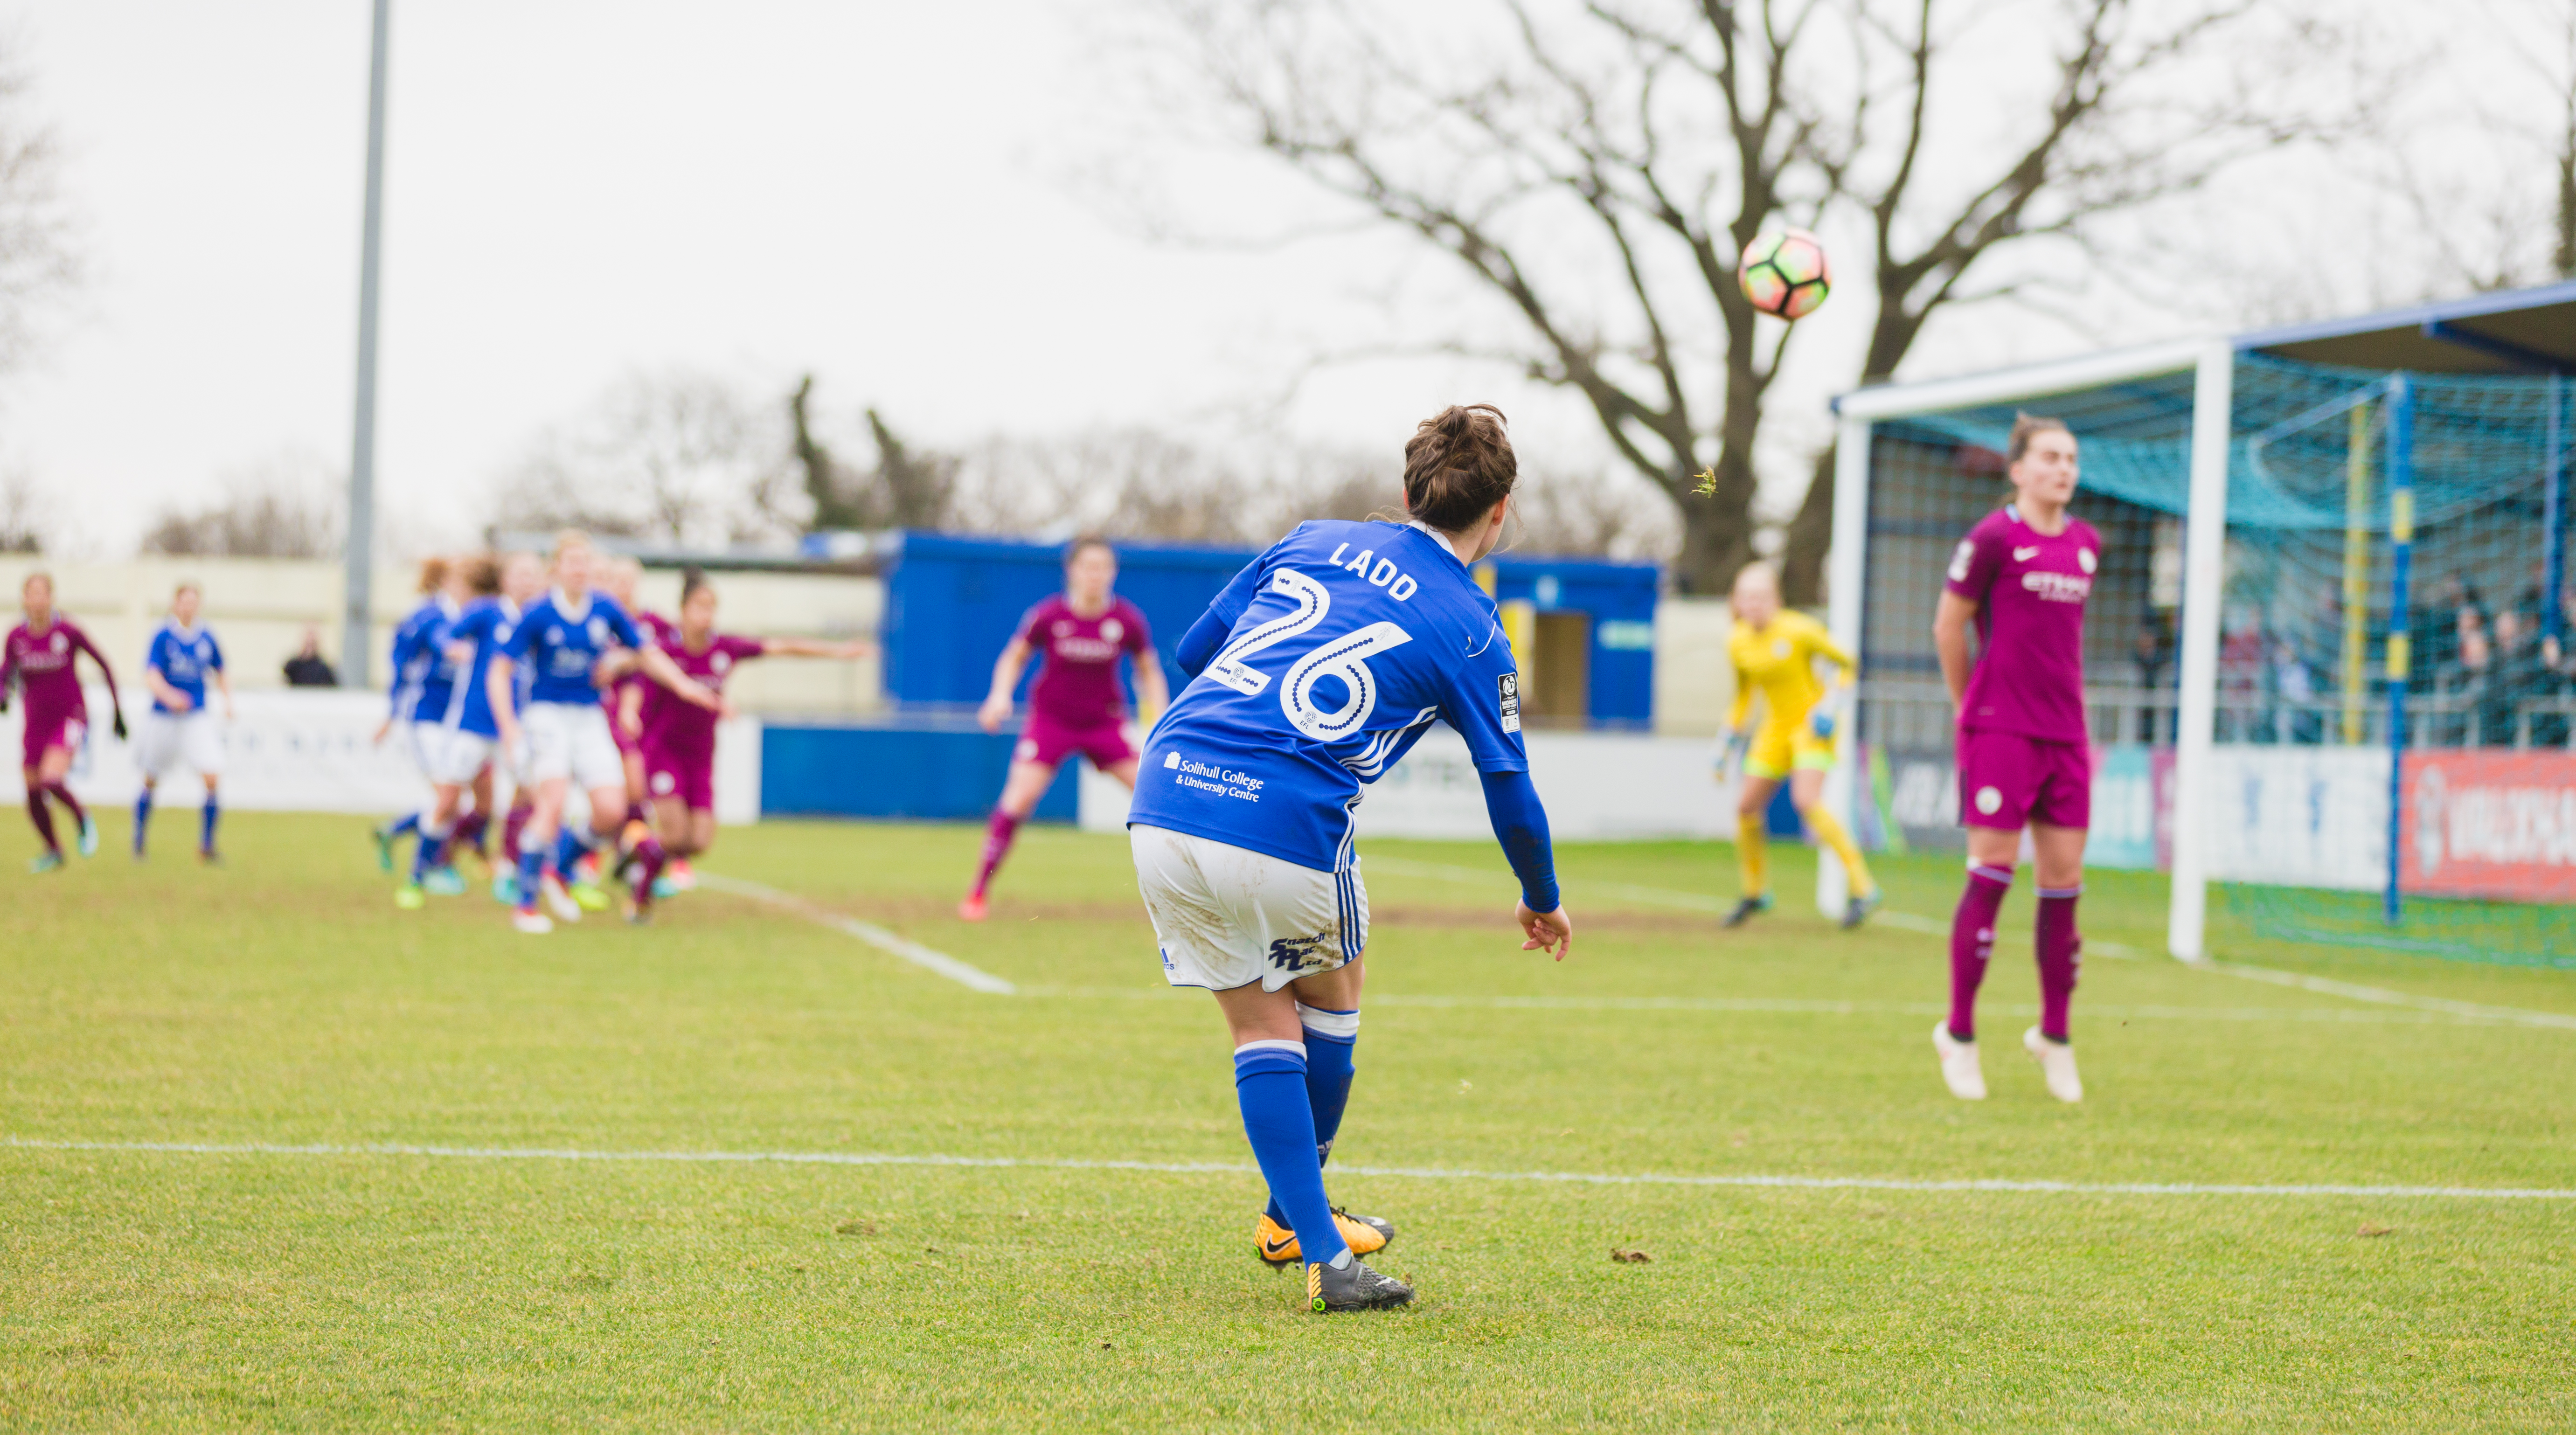 Birmingham City Ladies FC kicking the ball towards goal